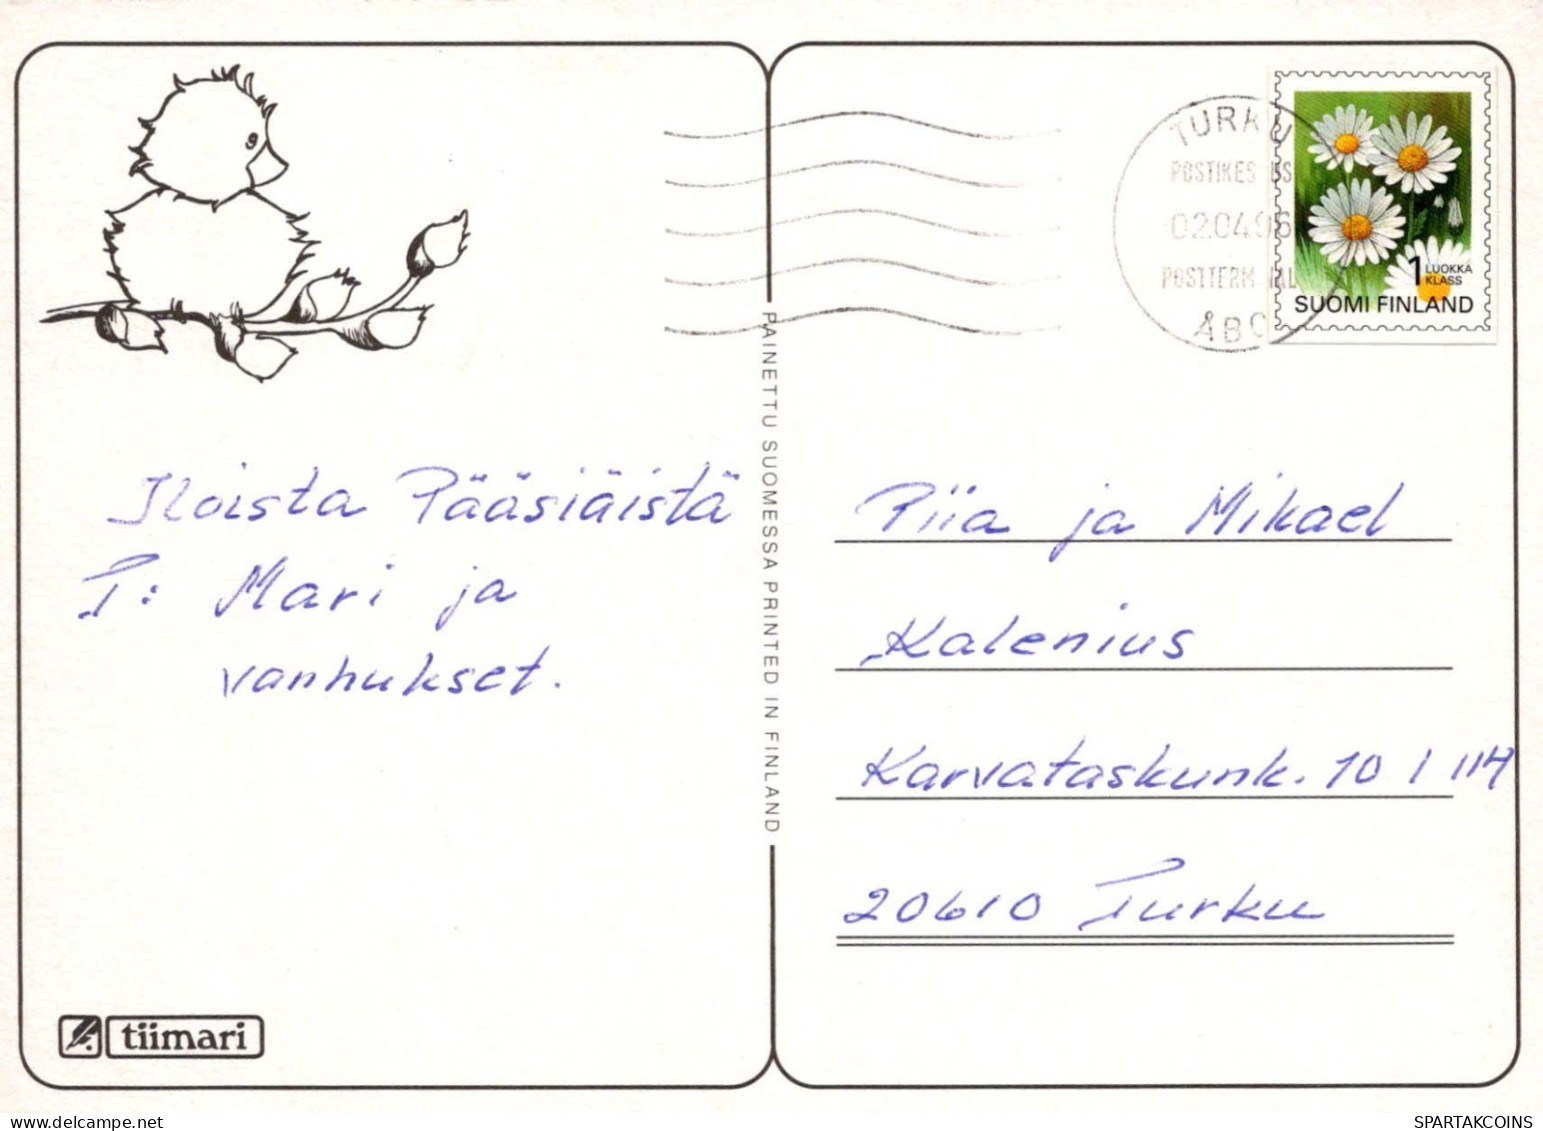 PASCUA HUEVO Vintage Tarjeta Postal CPSM #PBO222.ES - Easter